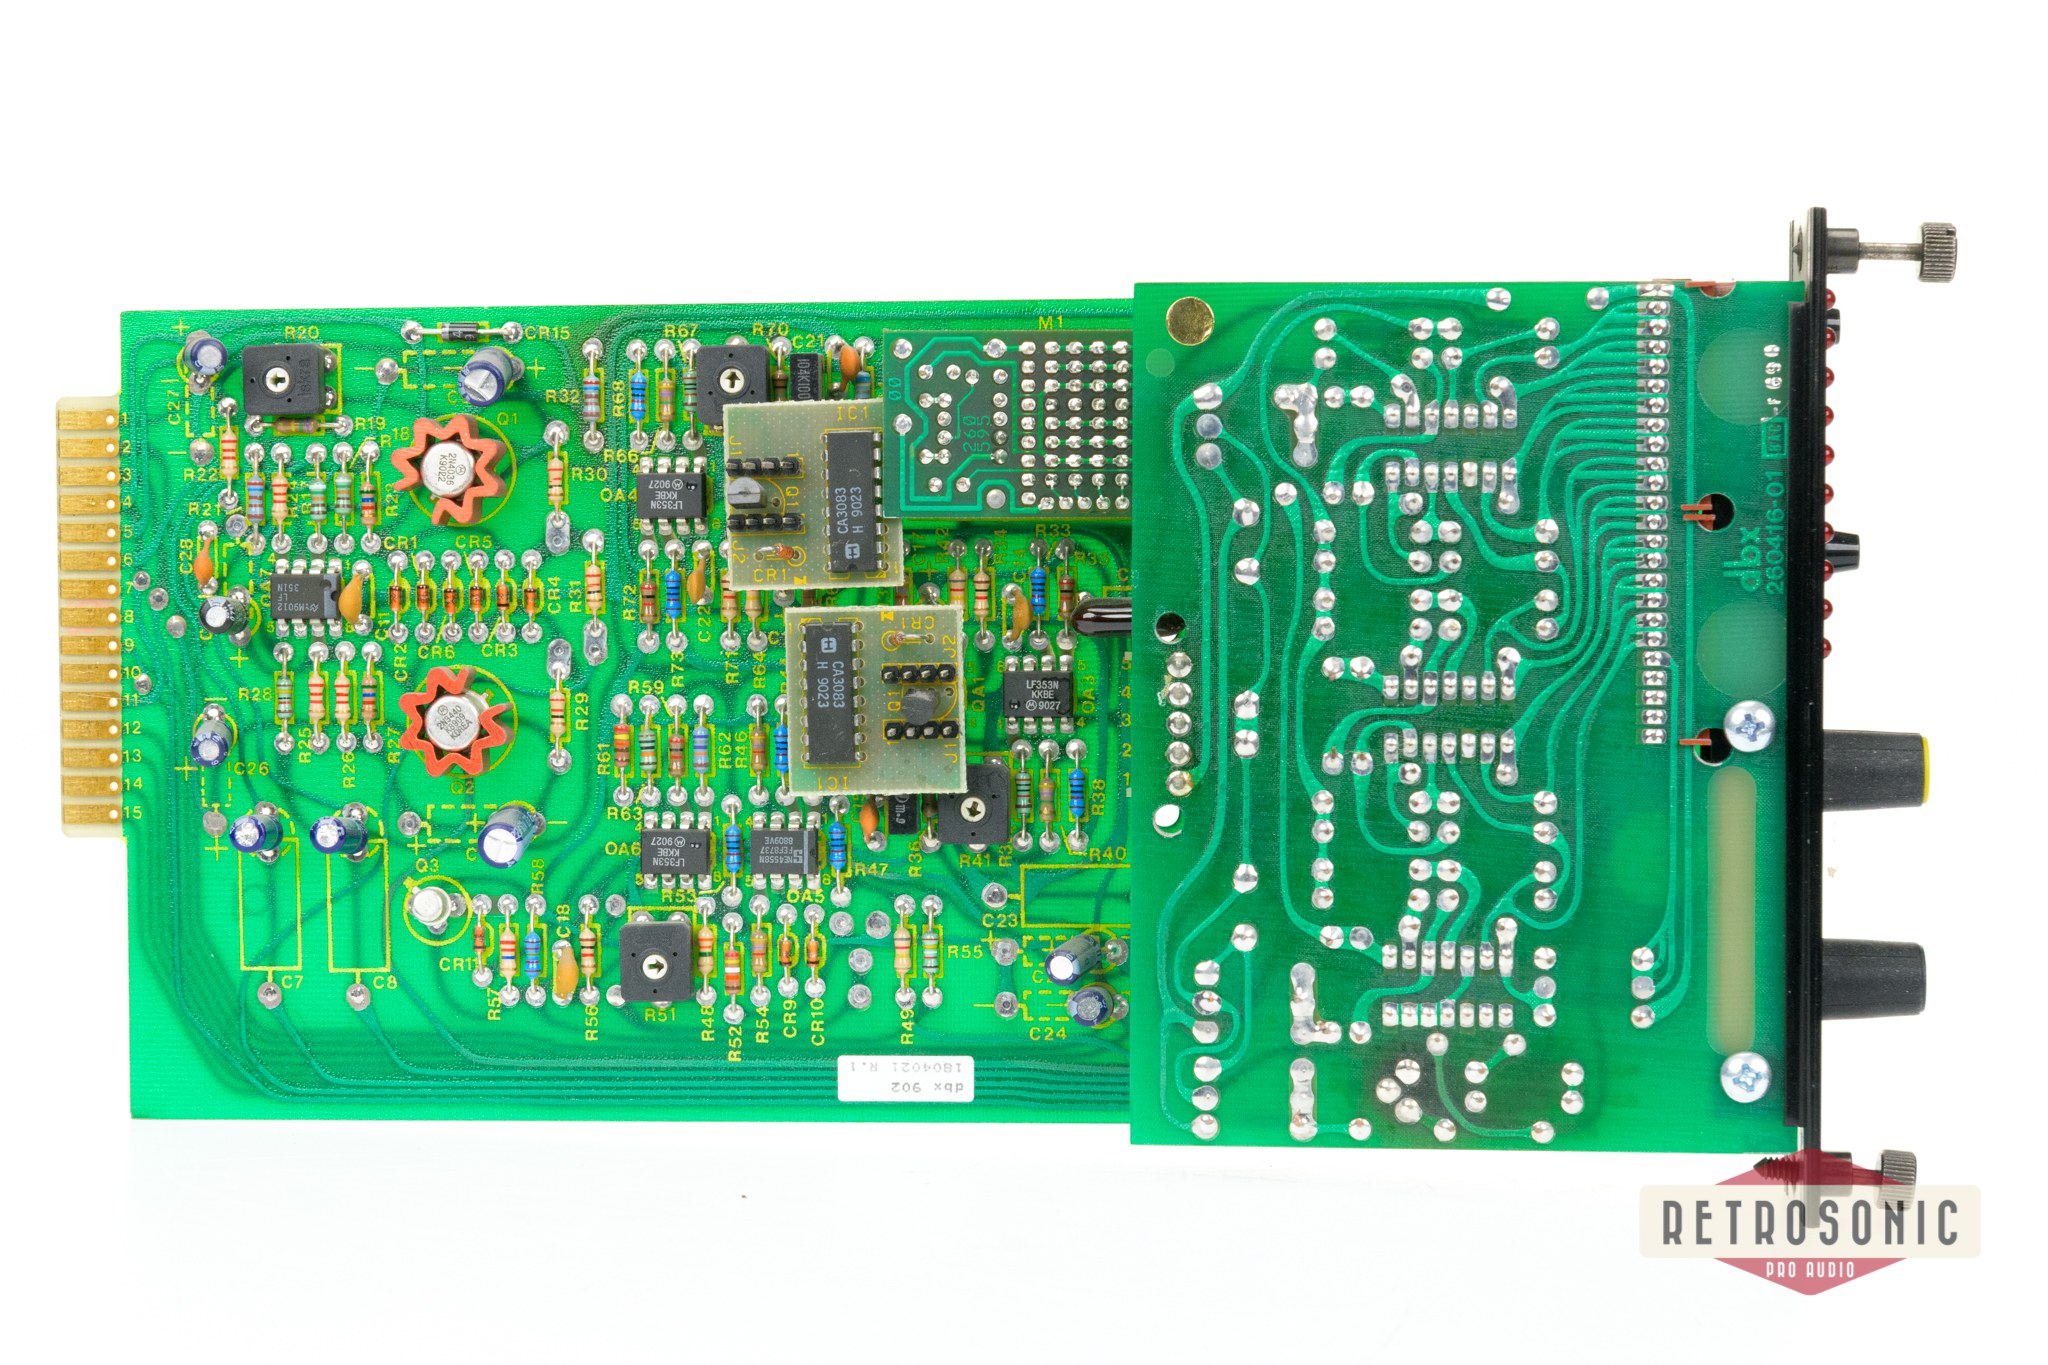 DBX 902 DE-Esser 900-series module # 3